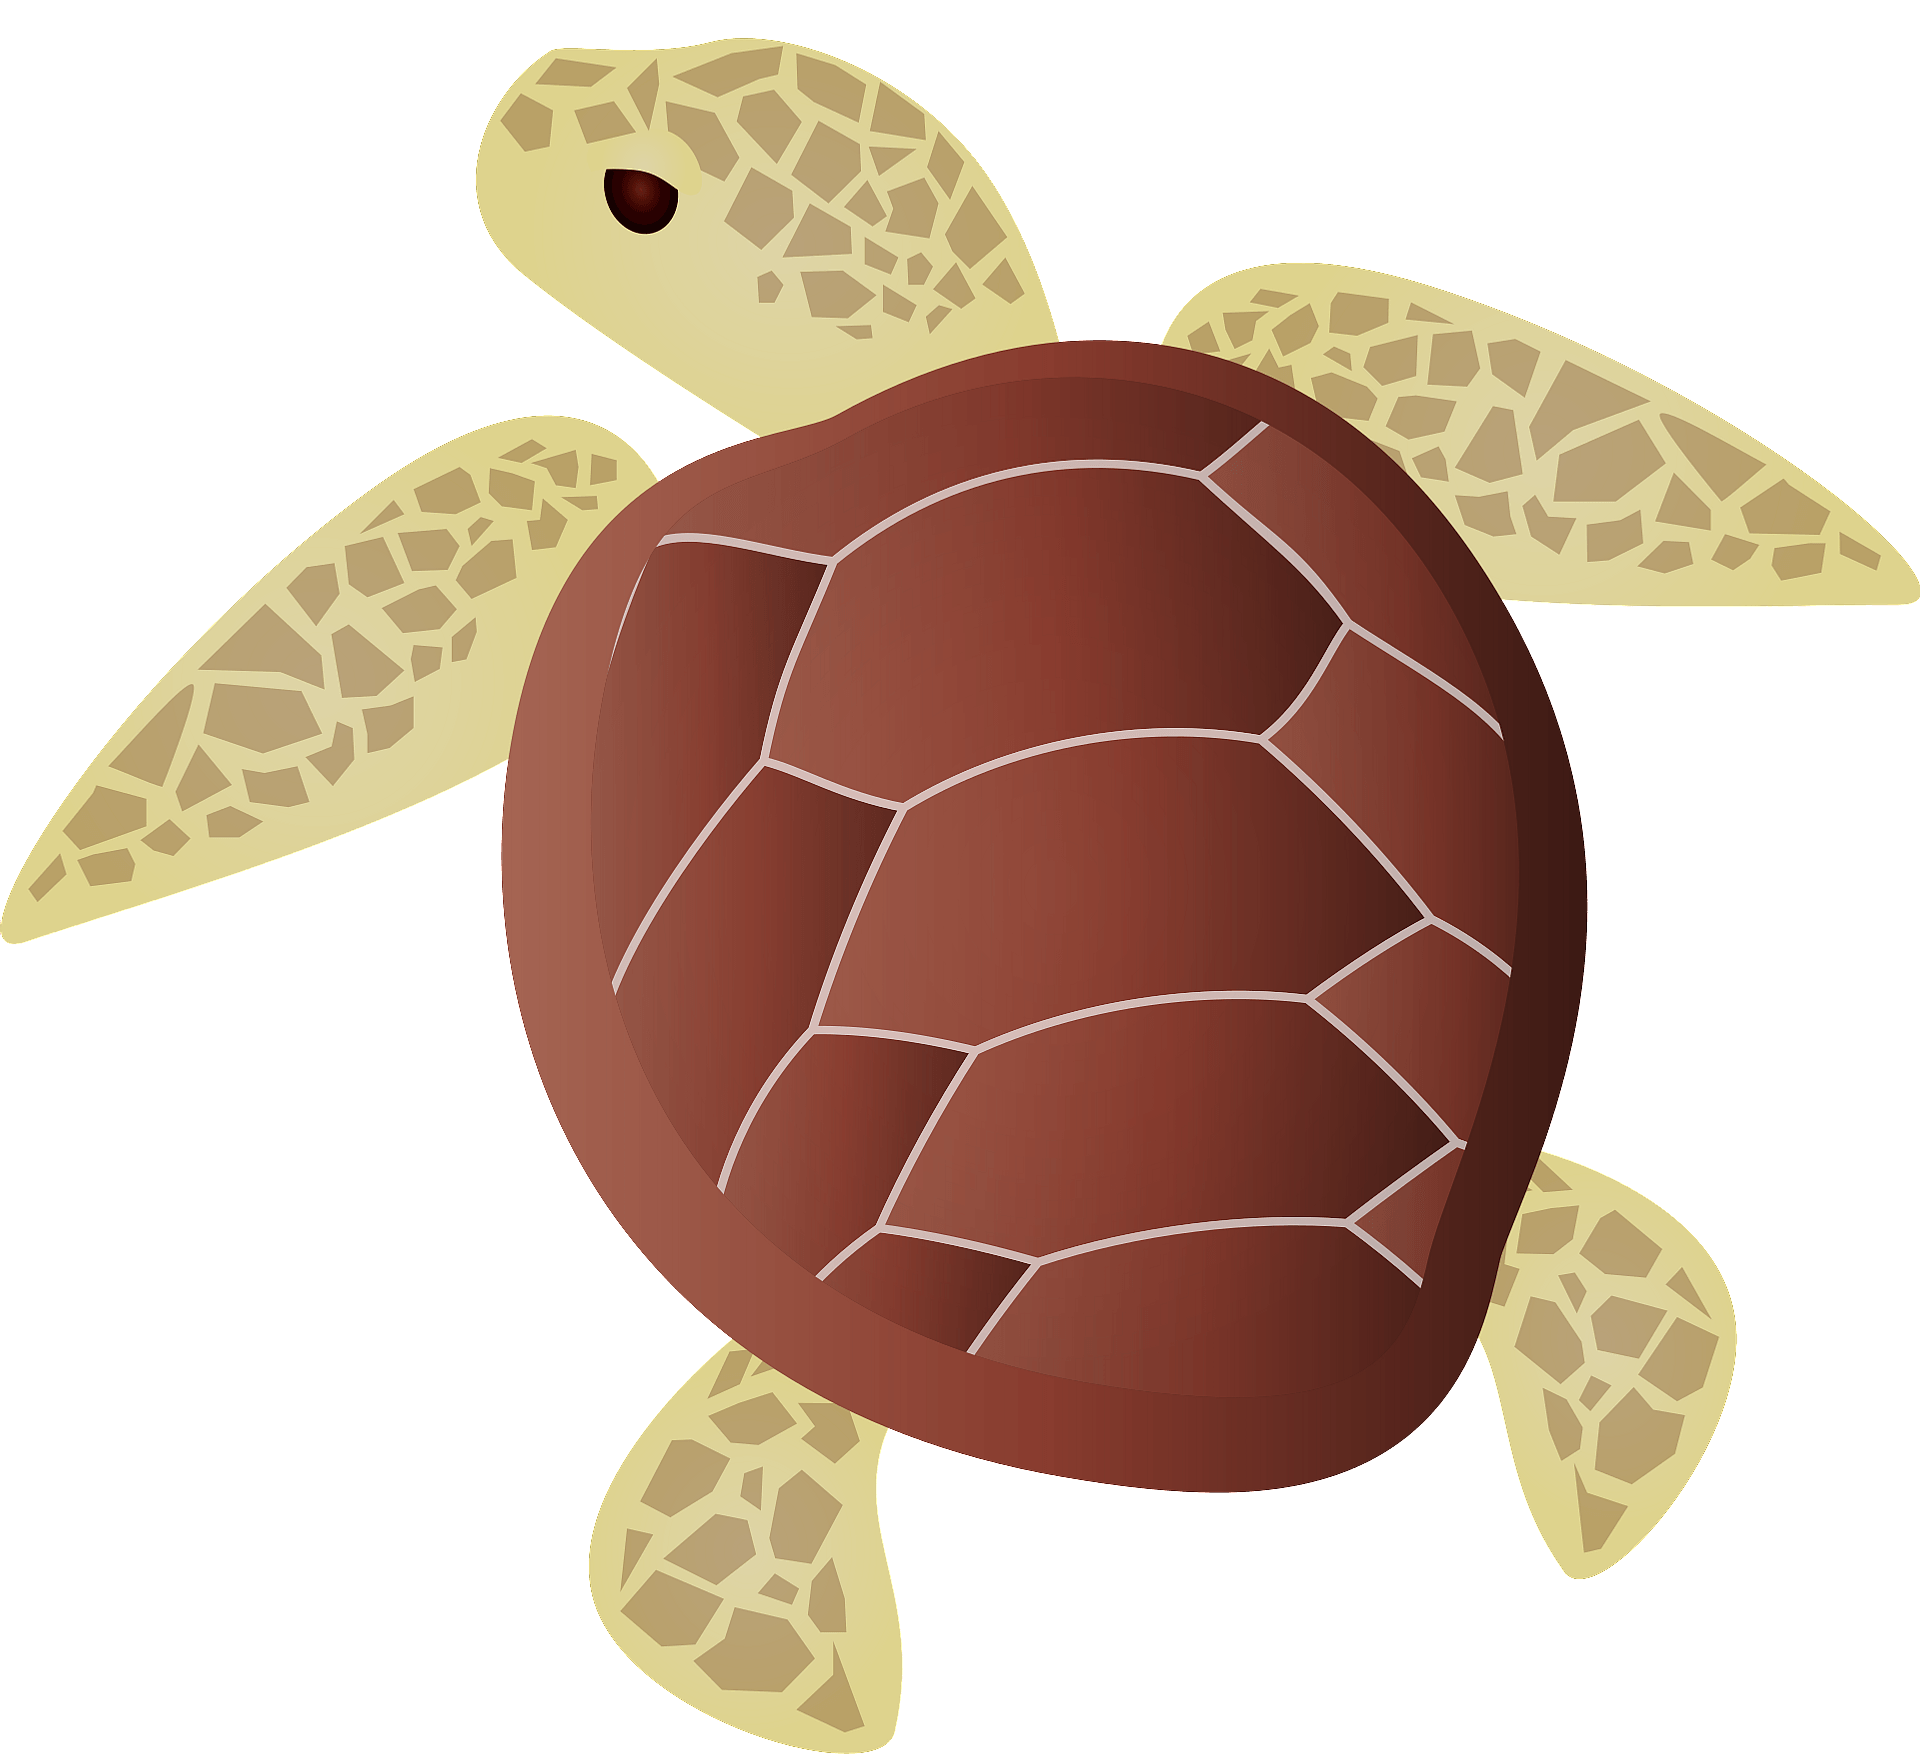 3-707-sea-turtle-clip-art-images-stock-photos-vectors-clip-art-library